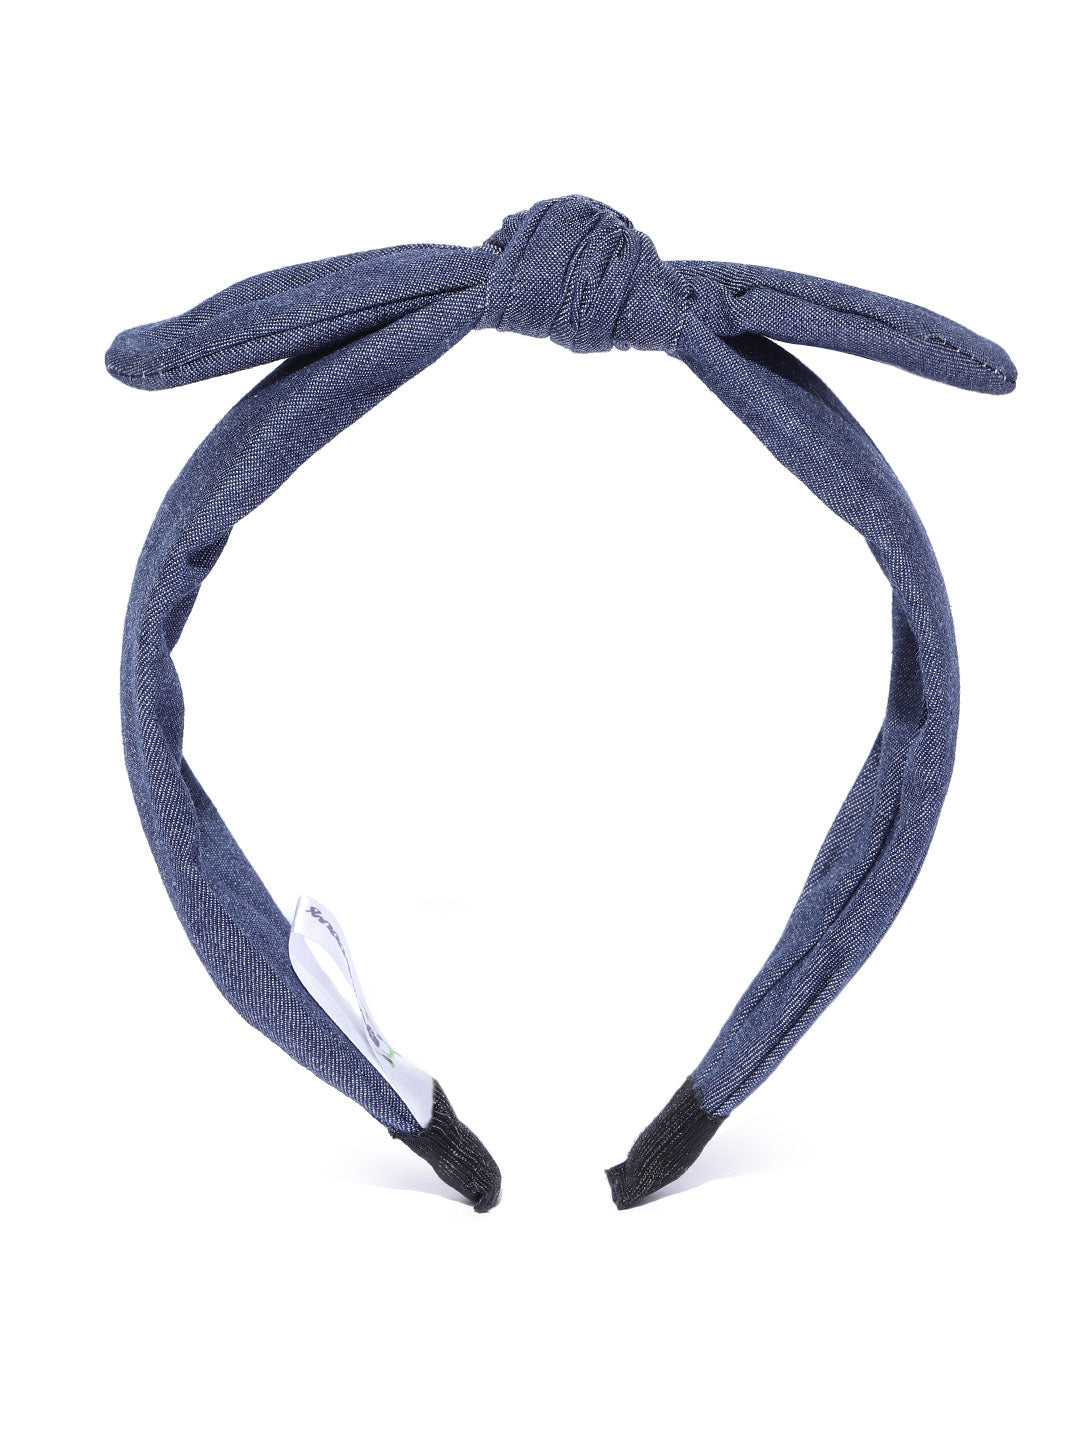 Blueberry Navy blue denim bunny knot hair band